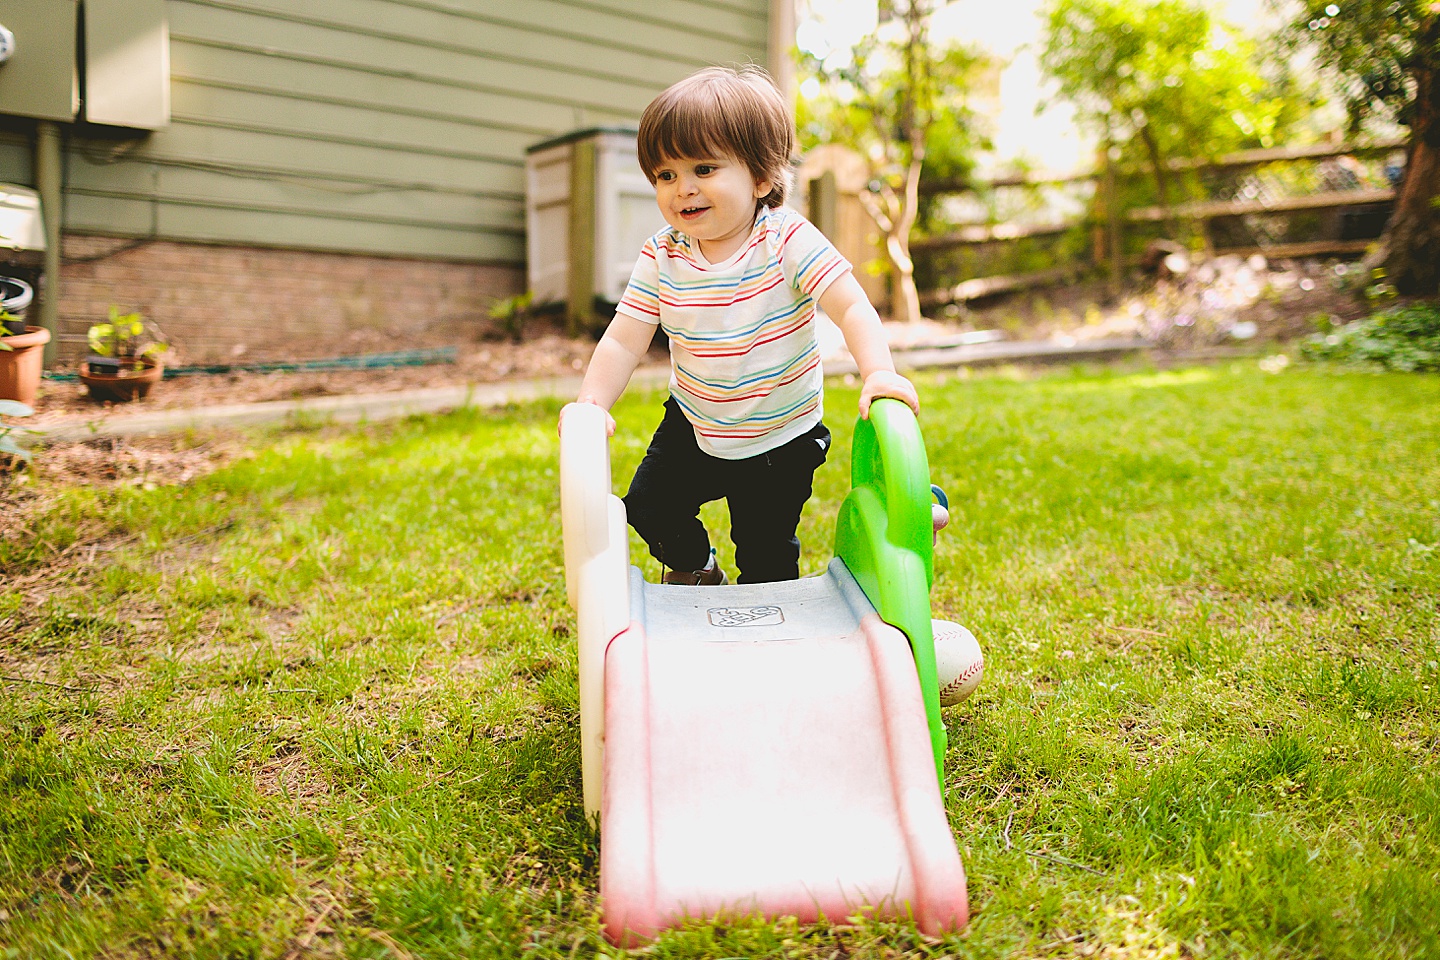 Toddler using tiny slide in yard